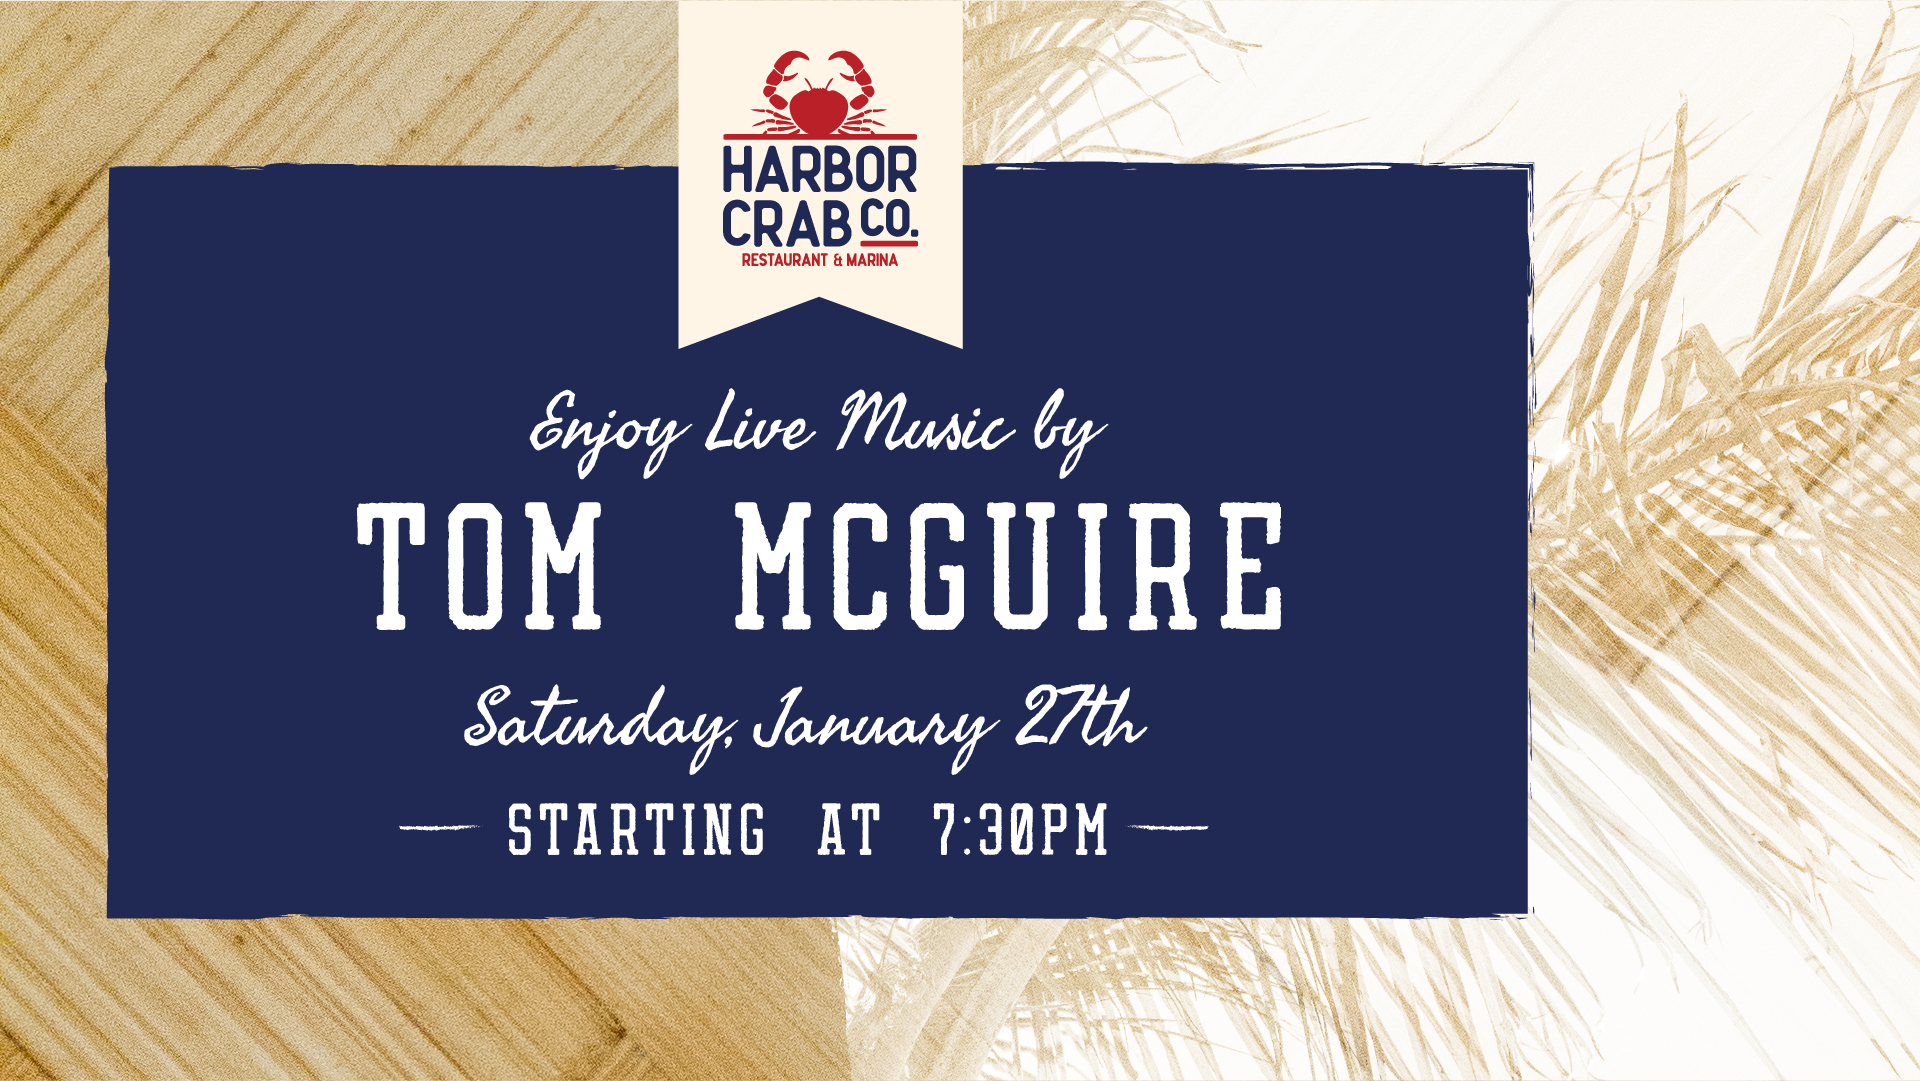 Tom McGuire at Harbor Crab on Saturday, January 27th at 7:30pm.